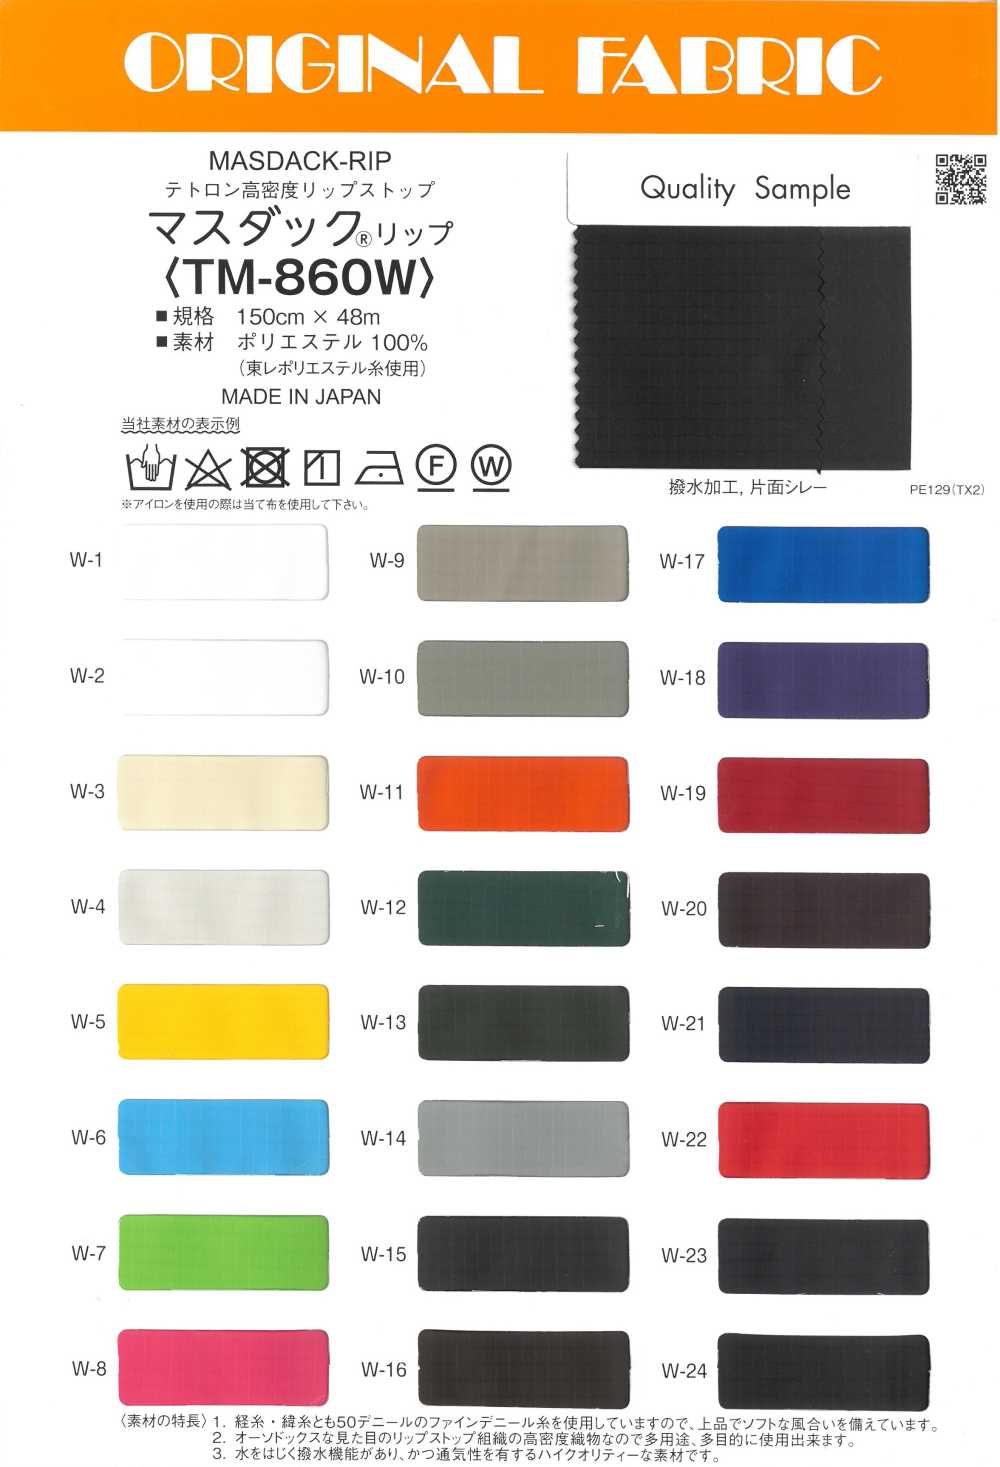 TM860W Masdaq® Lip Tetron High Density Ripstop[Textile / Fabric] Masuda